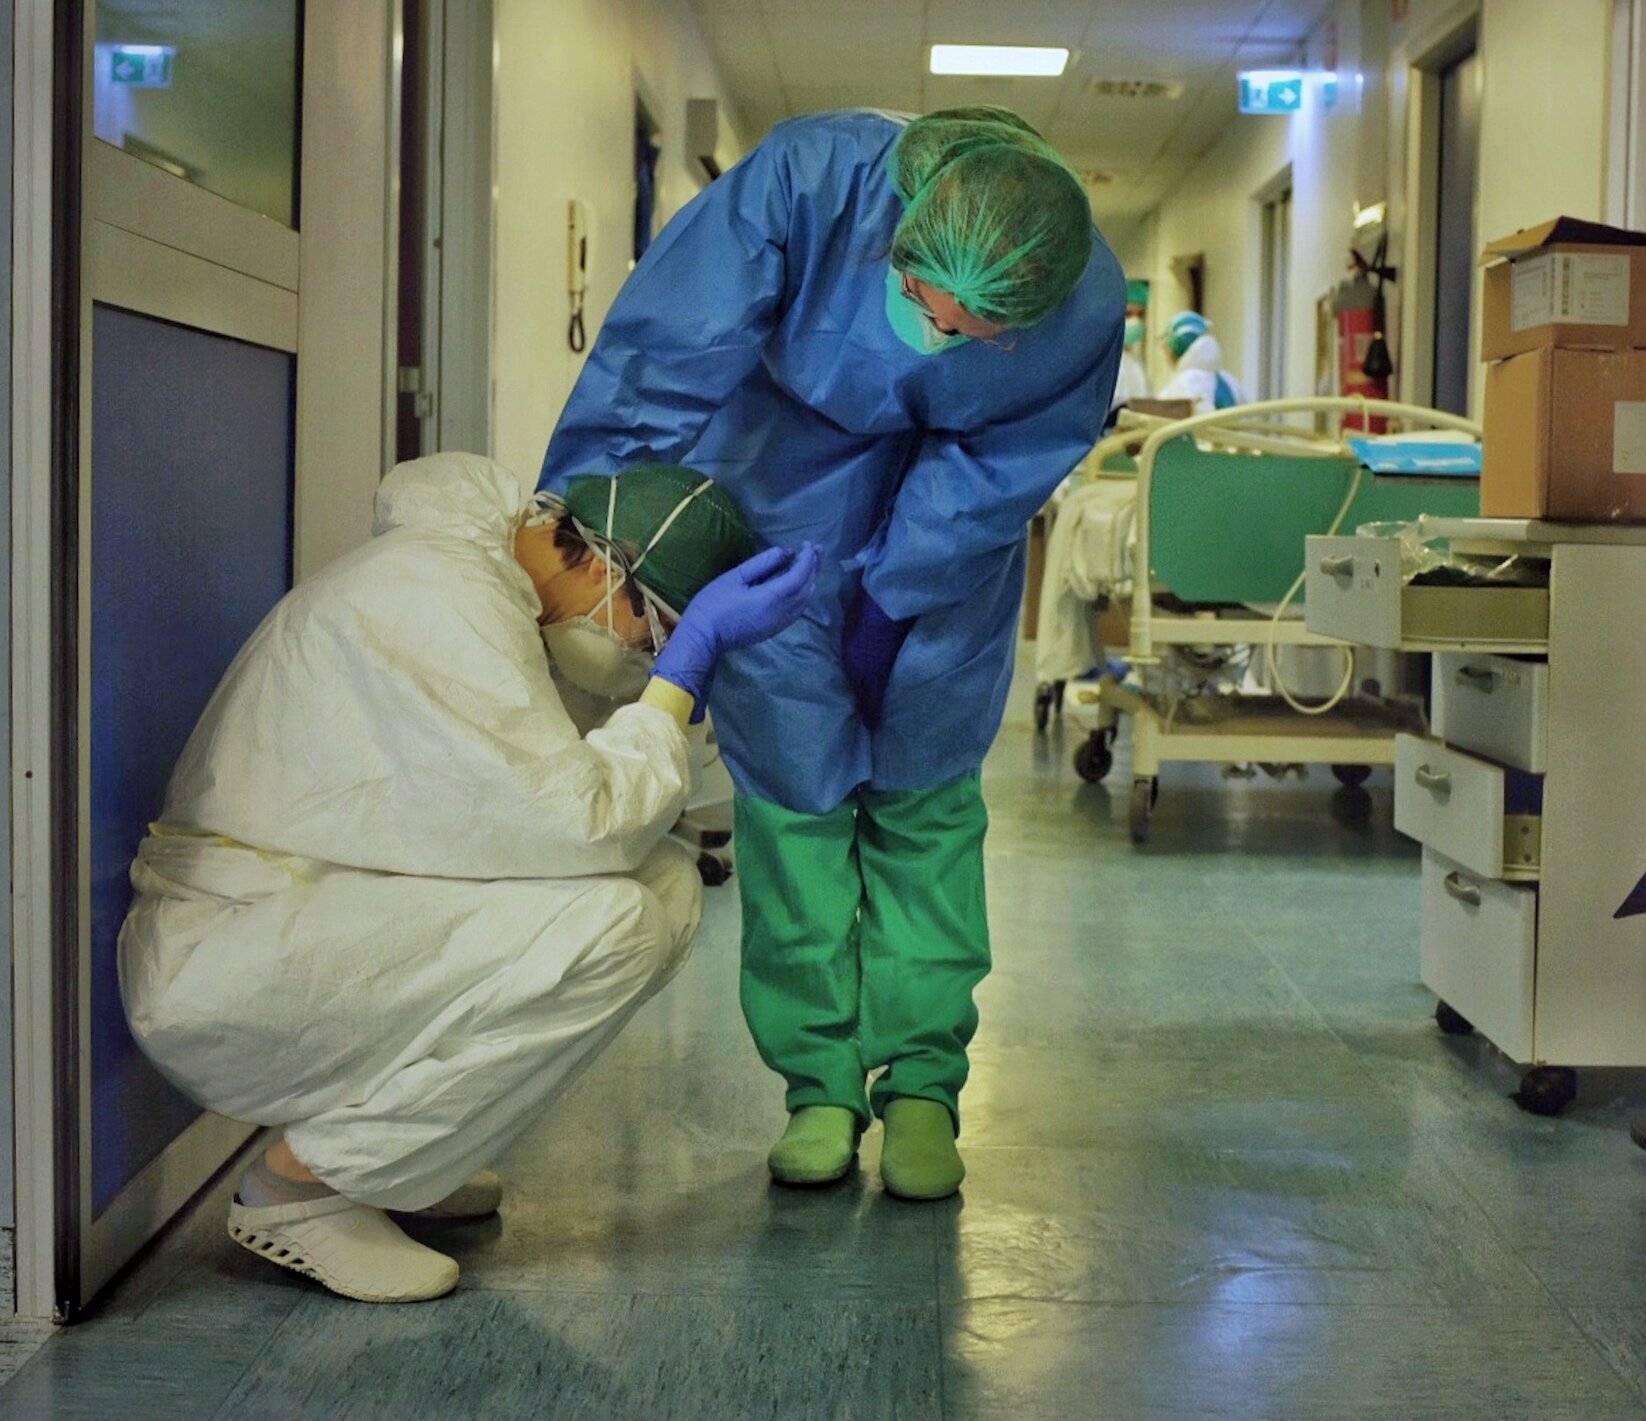 Inside Cremona's intensive care unit